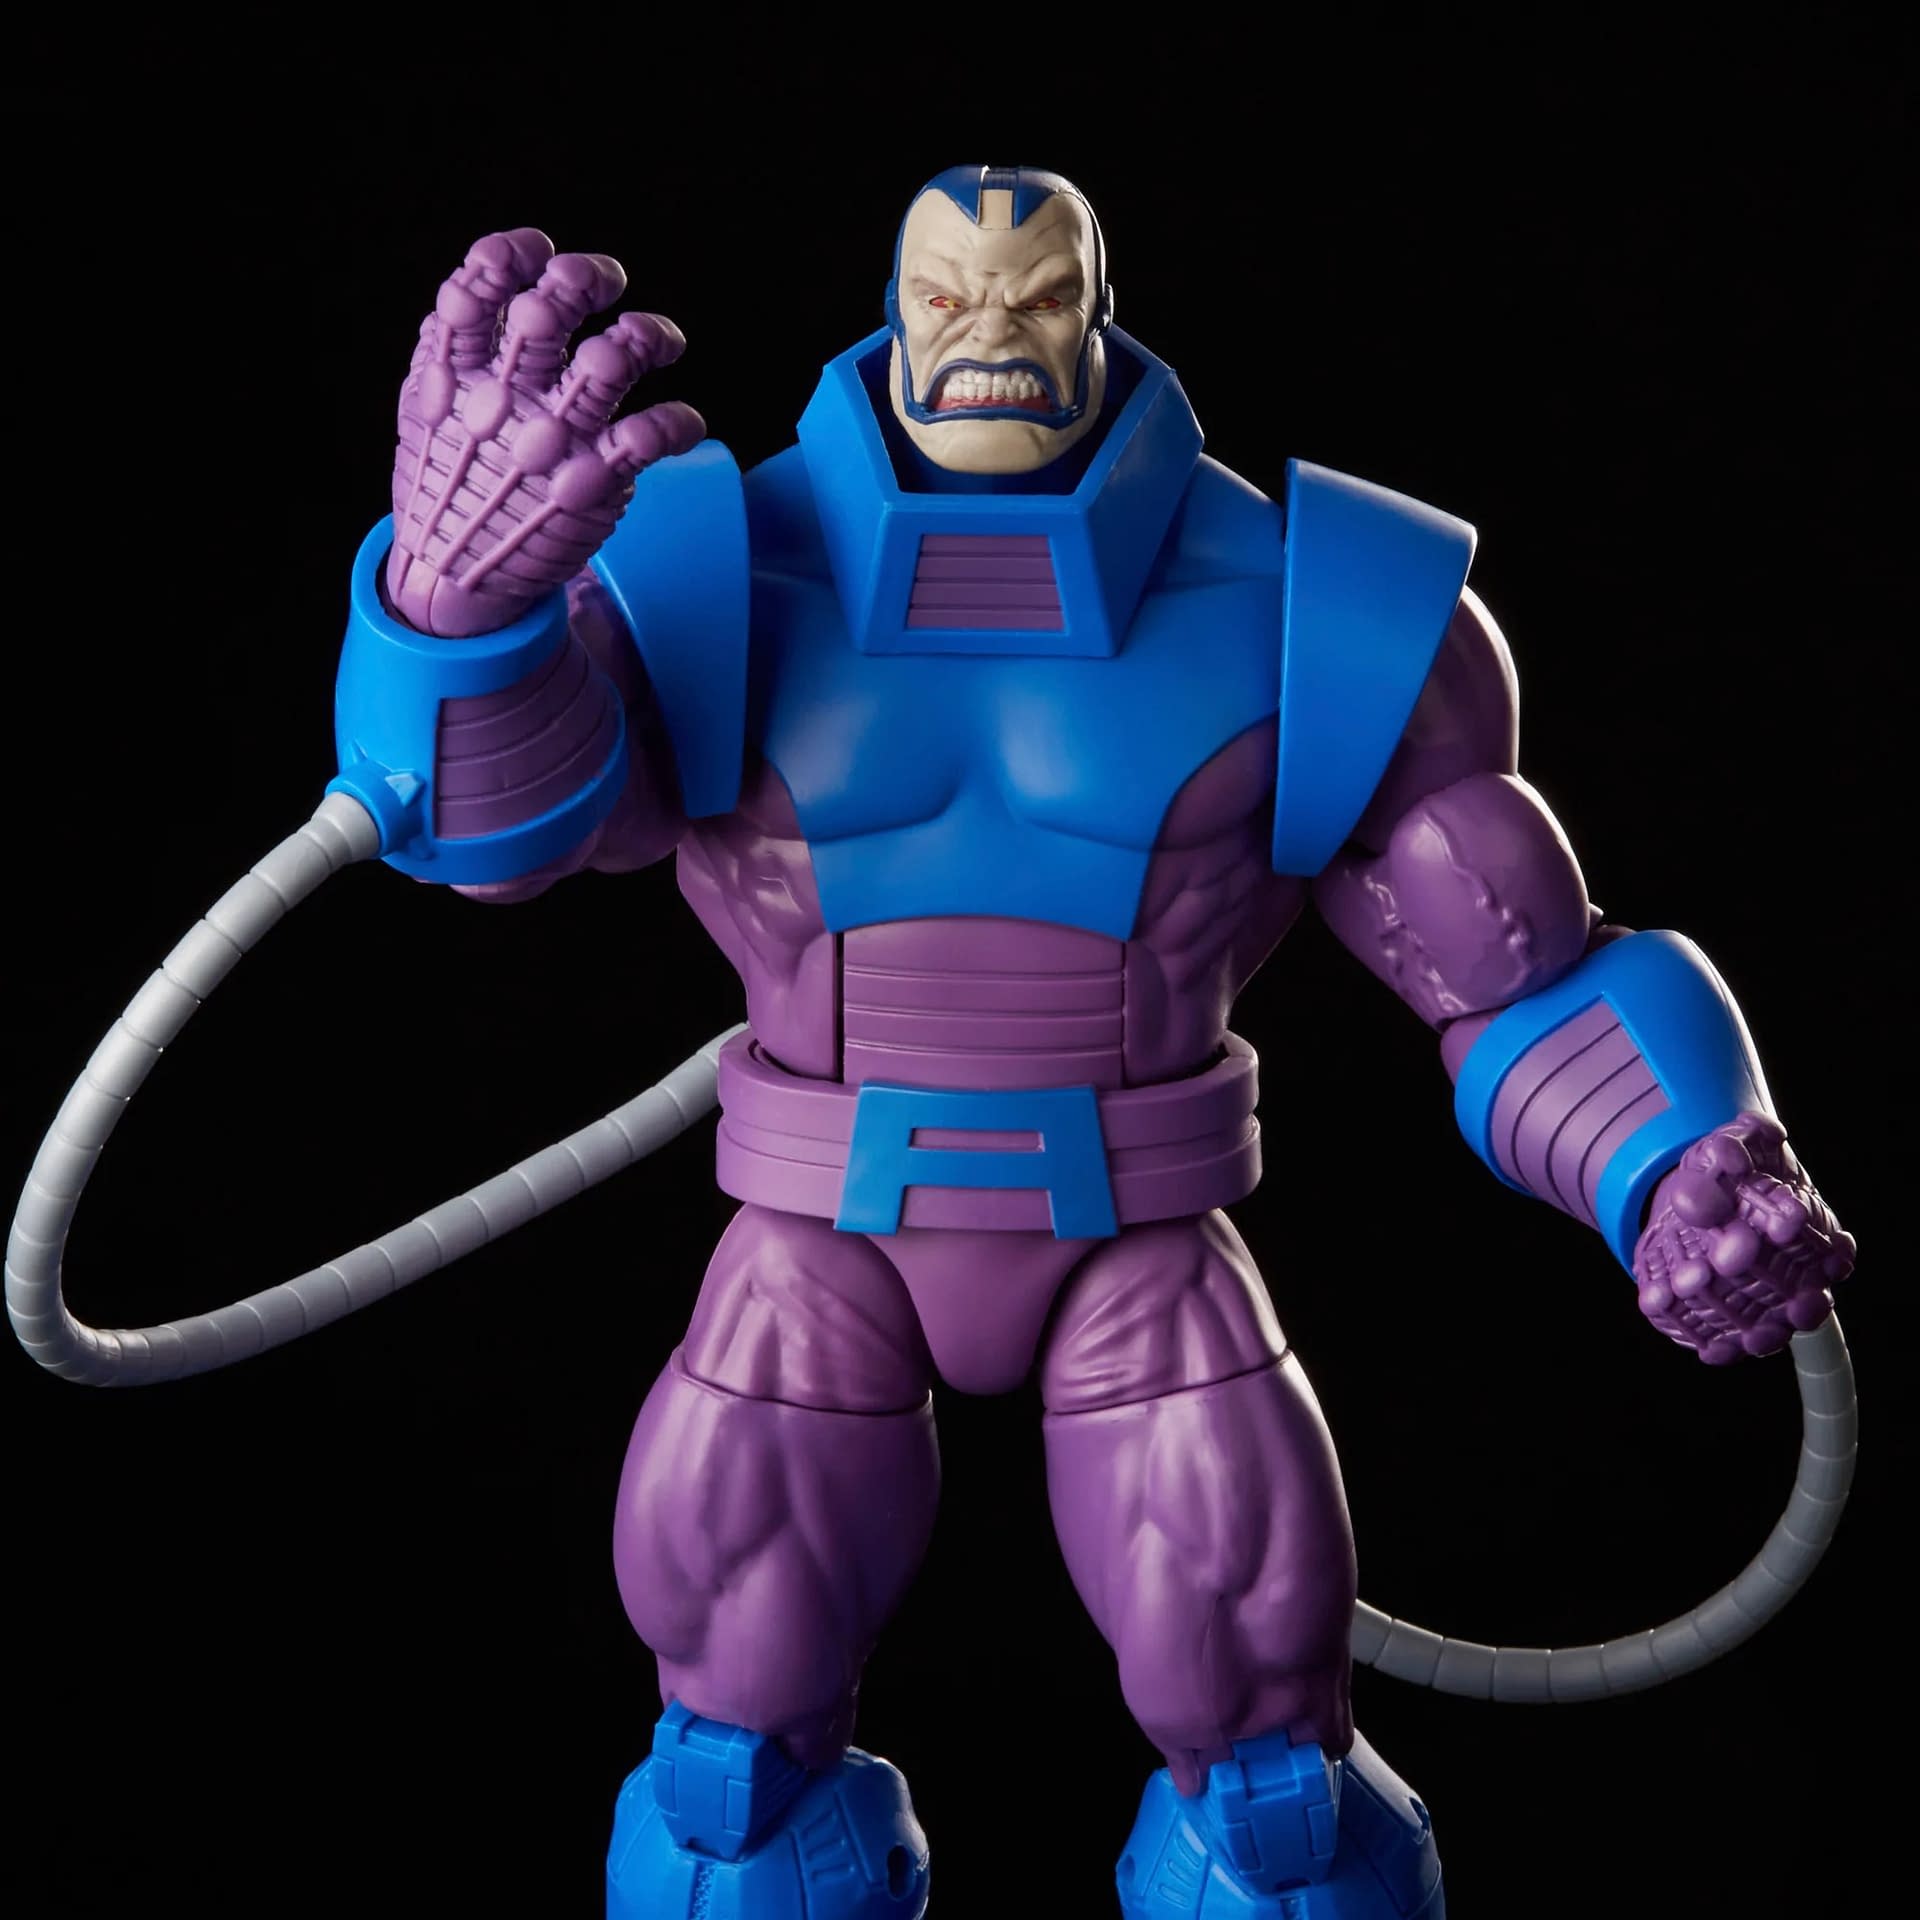 X-Men's Apocalypse Receives Classic Marvel Legends Figure from Hasbro